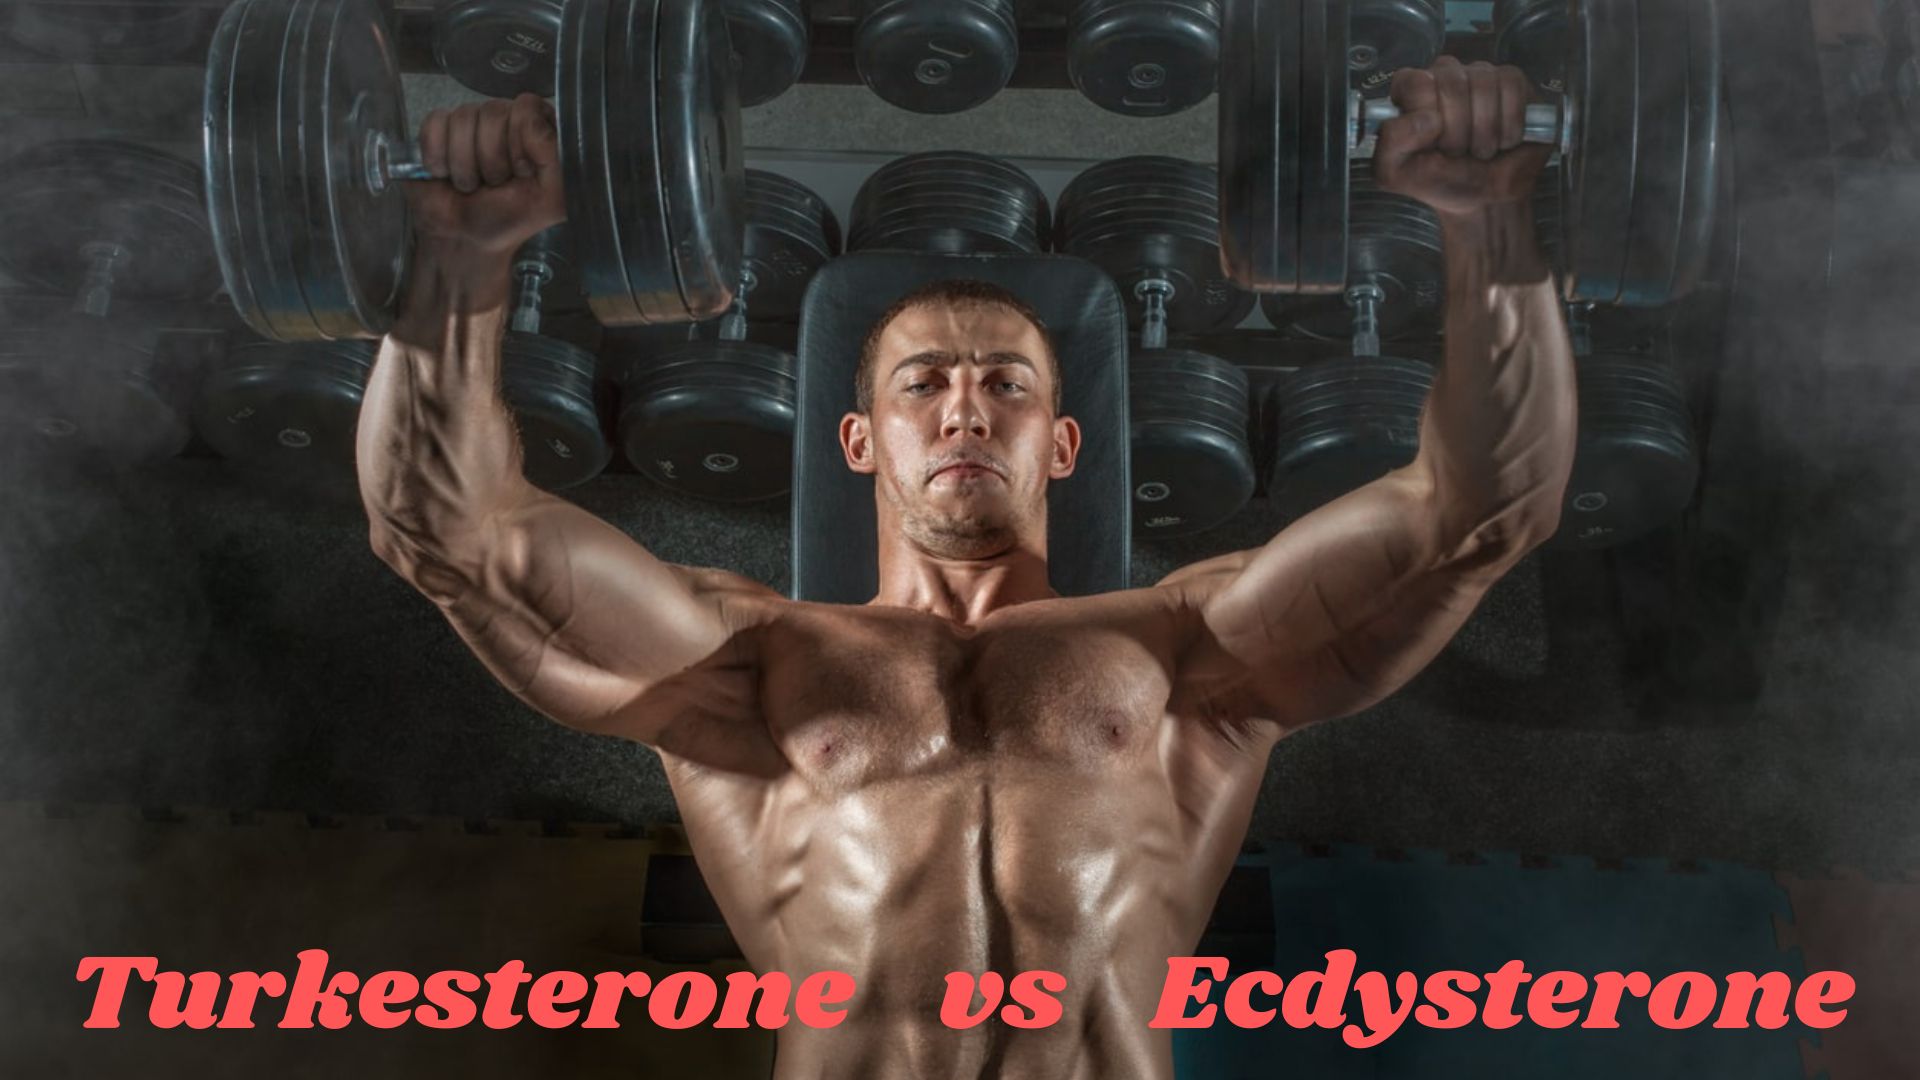 Turkesterone vs Ecdysterone